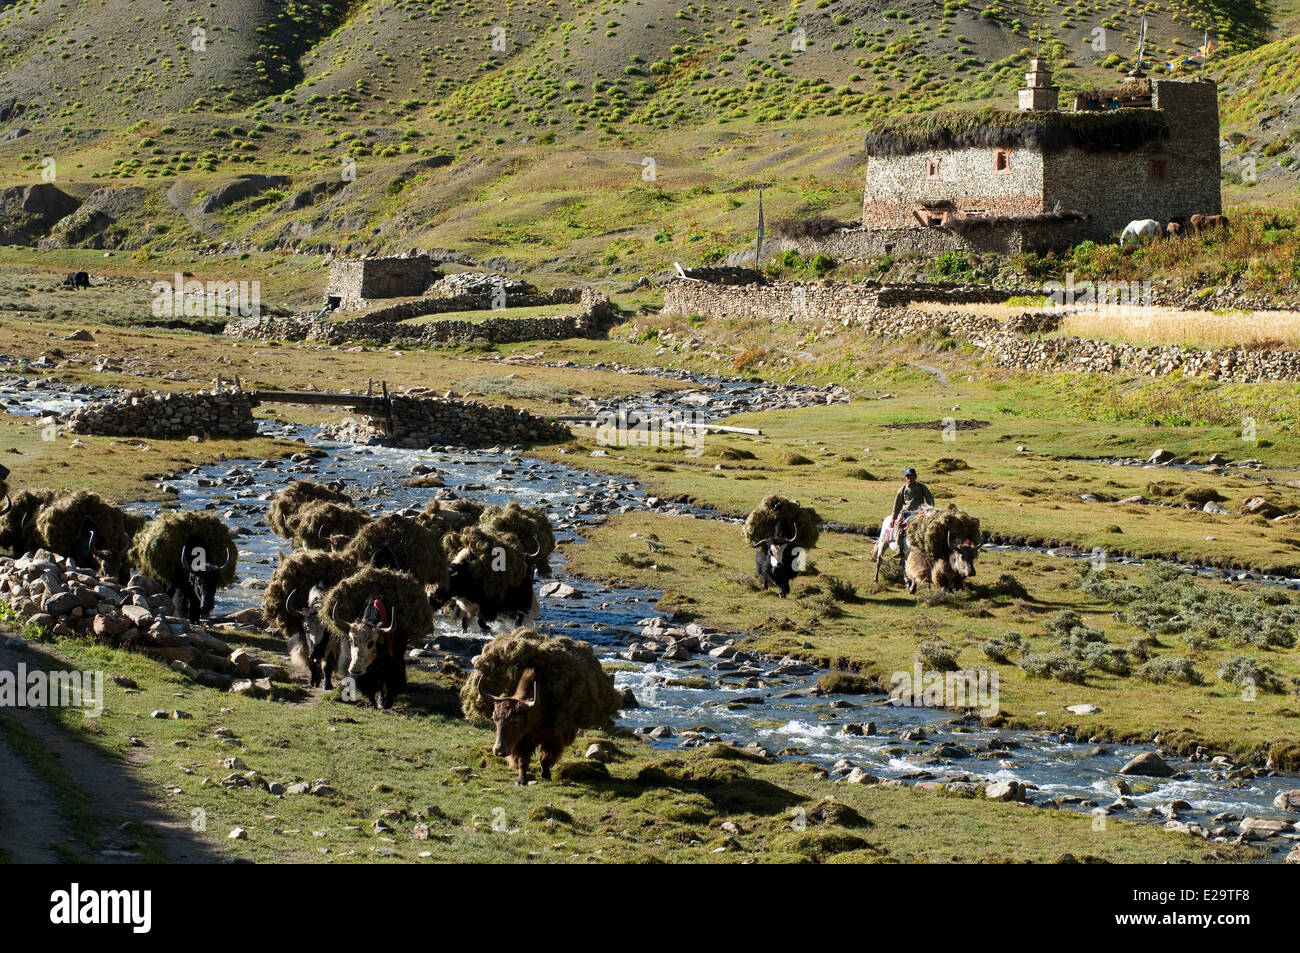 Il Nepal, Karnali zona, regione Dolpo, Tarap valley, yak caravan Foto Stock